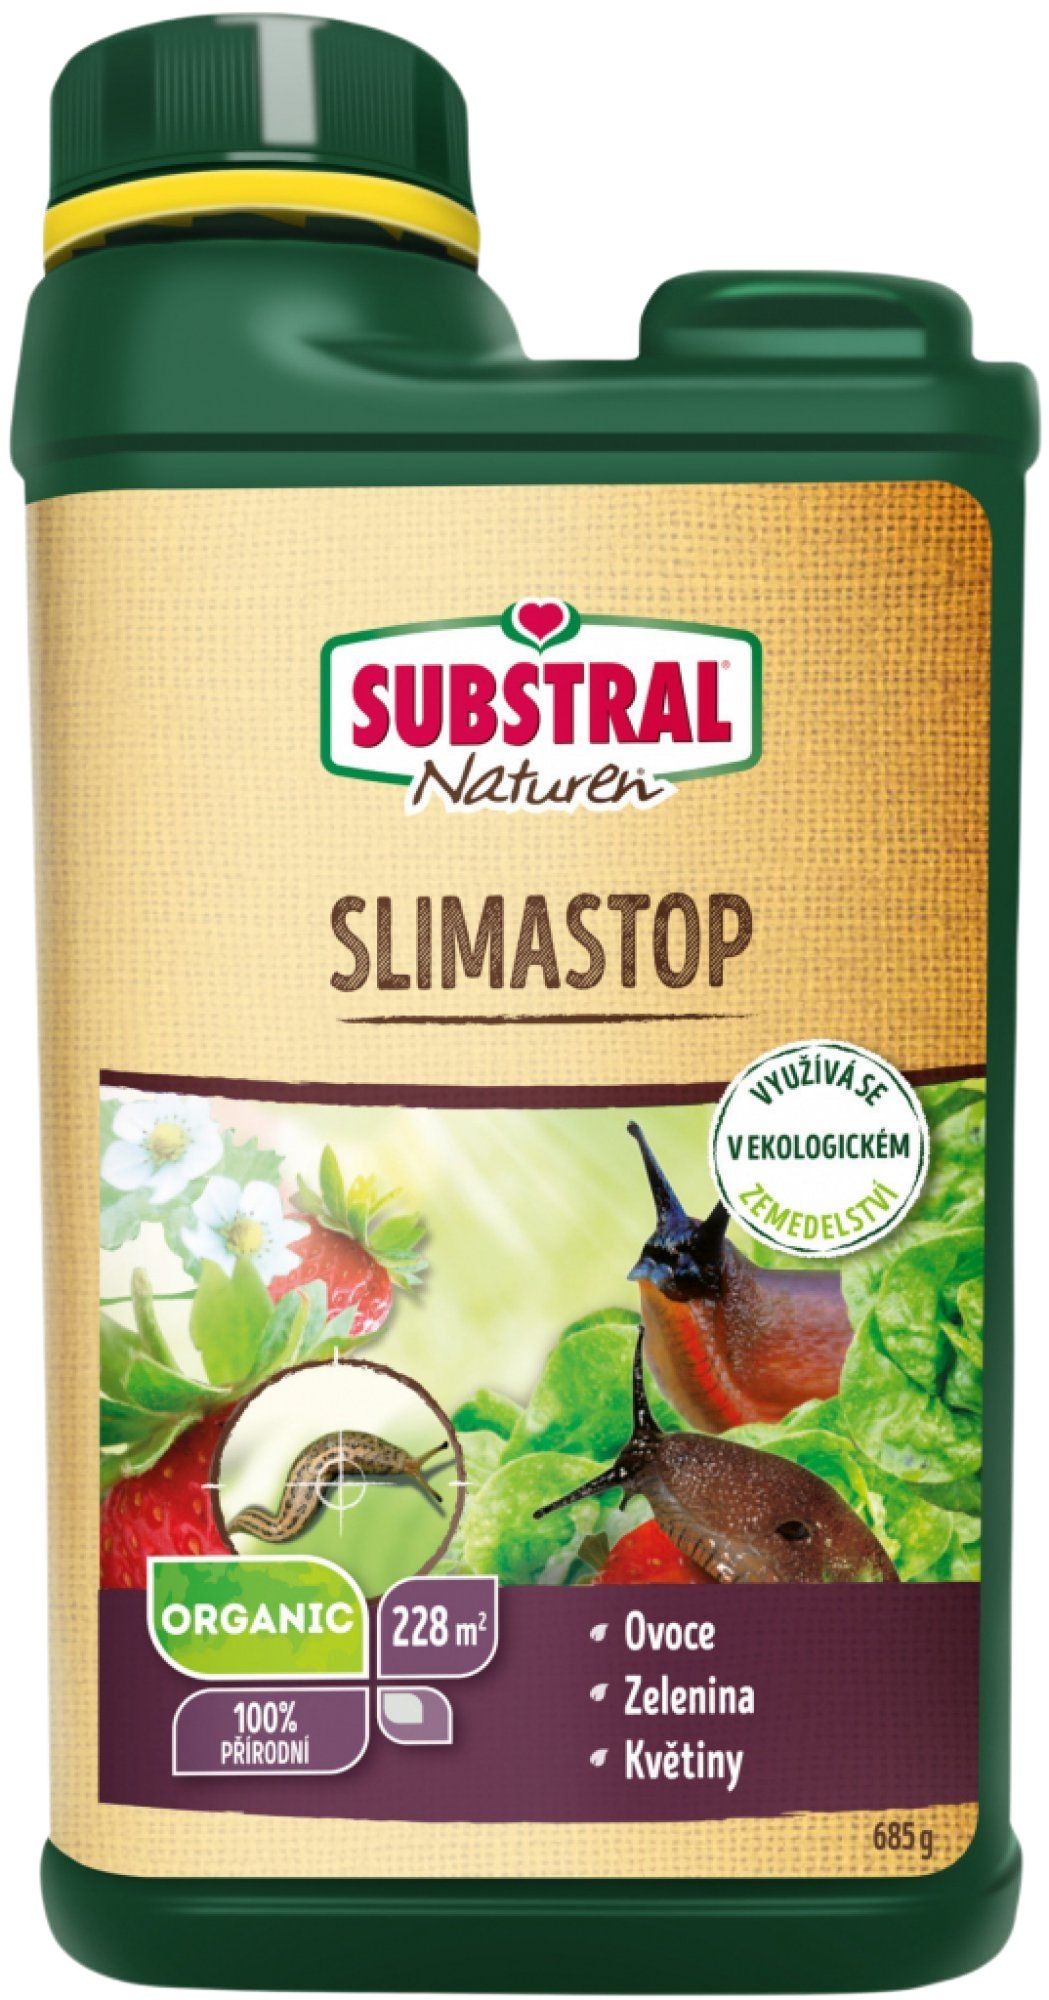 Substral Naturen Slimastop 685 g 1906101